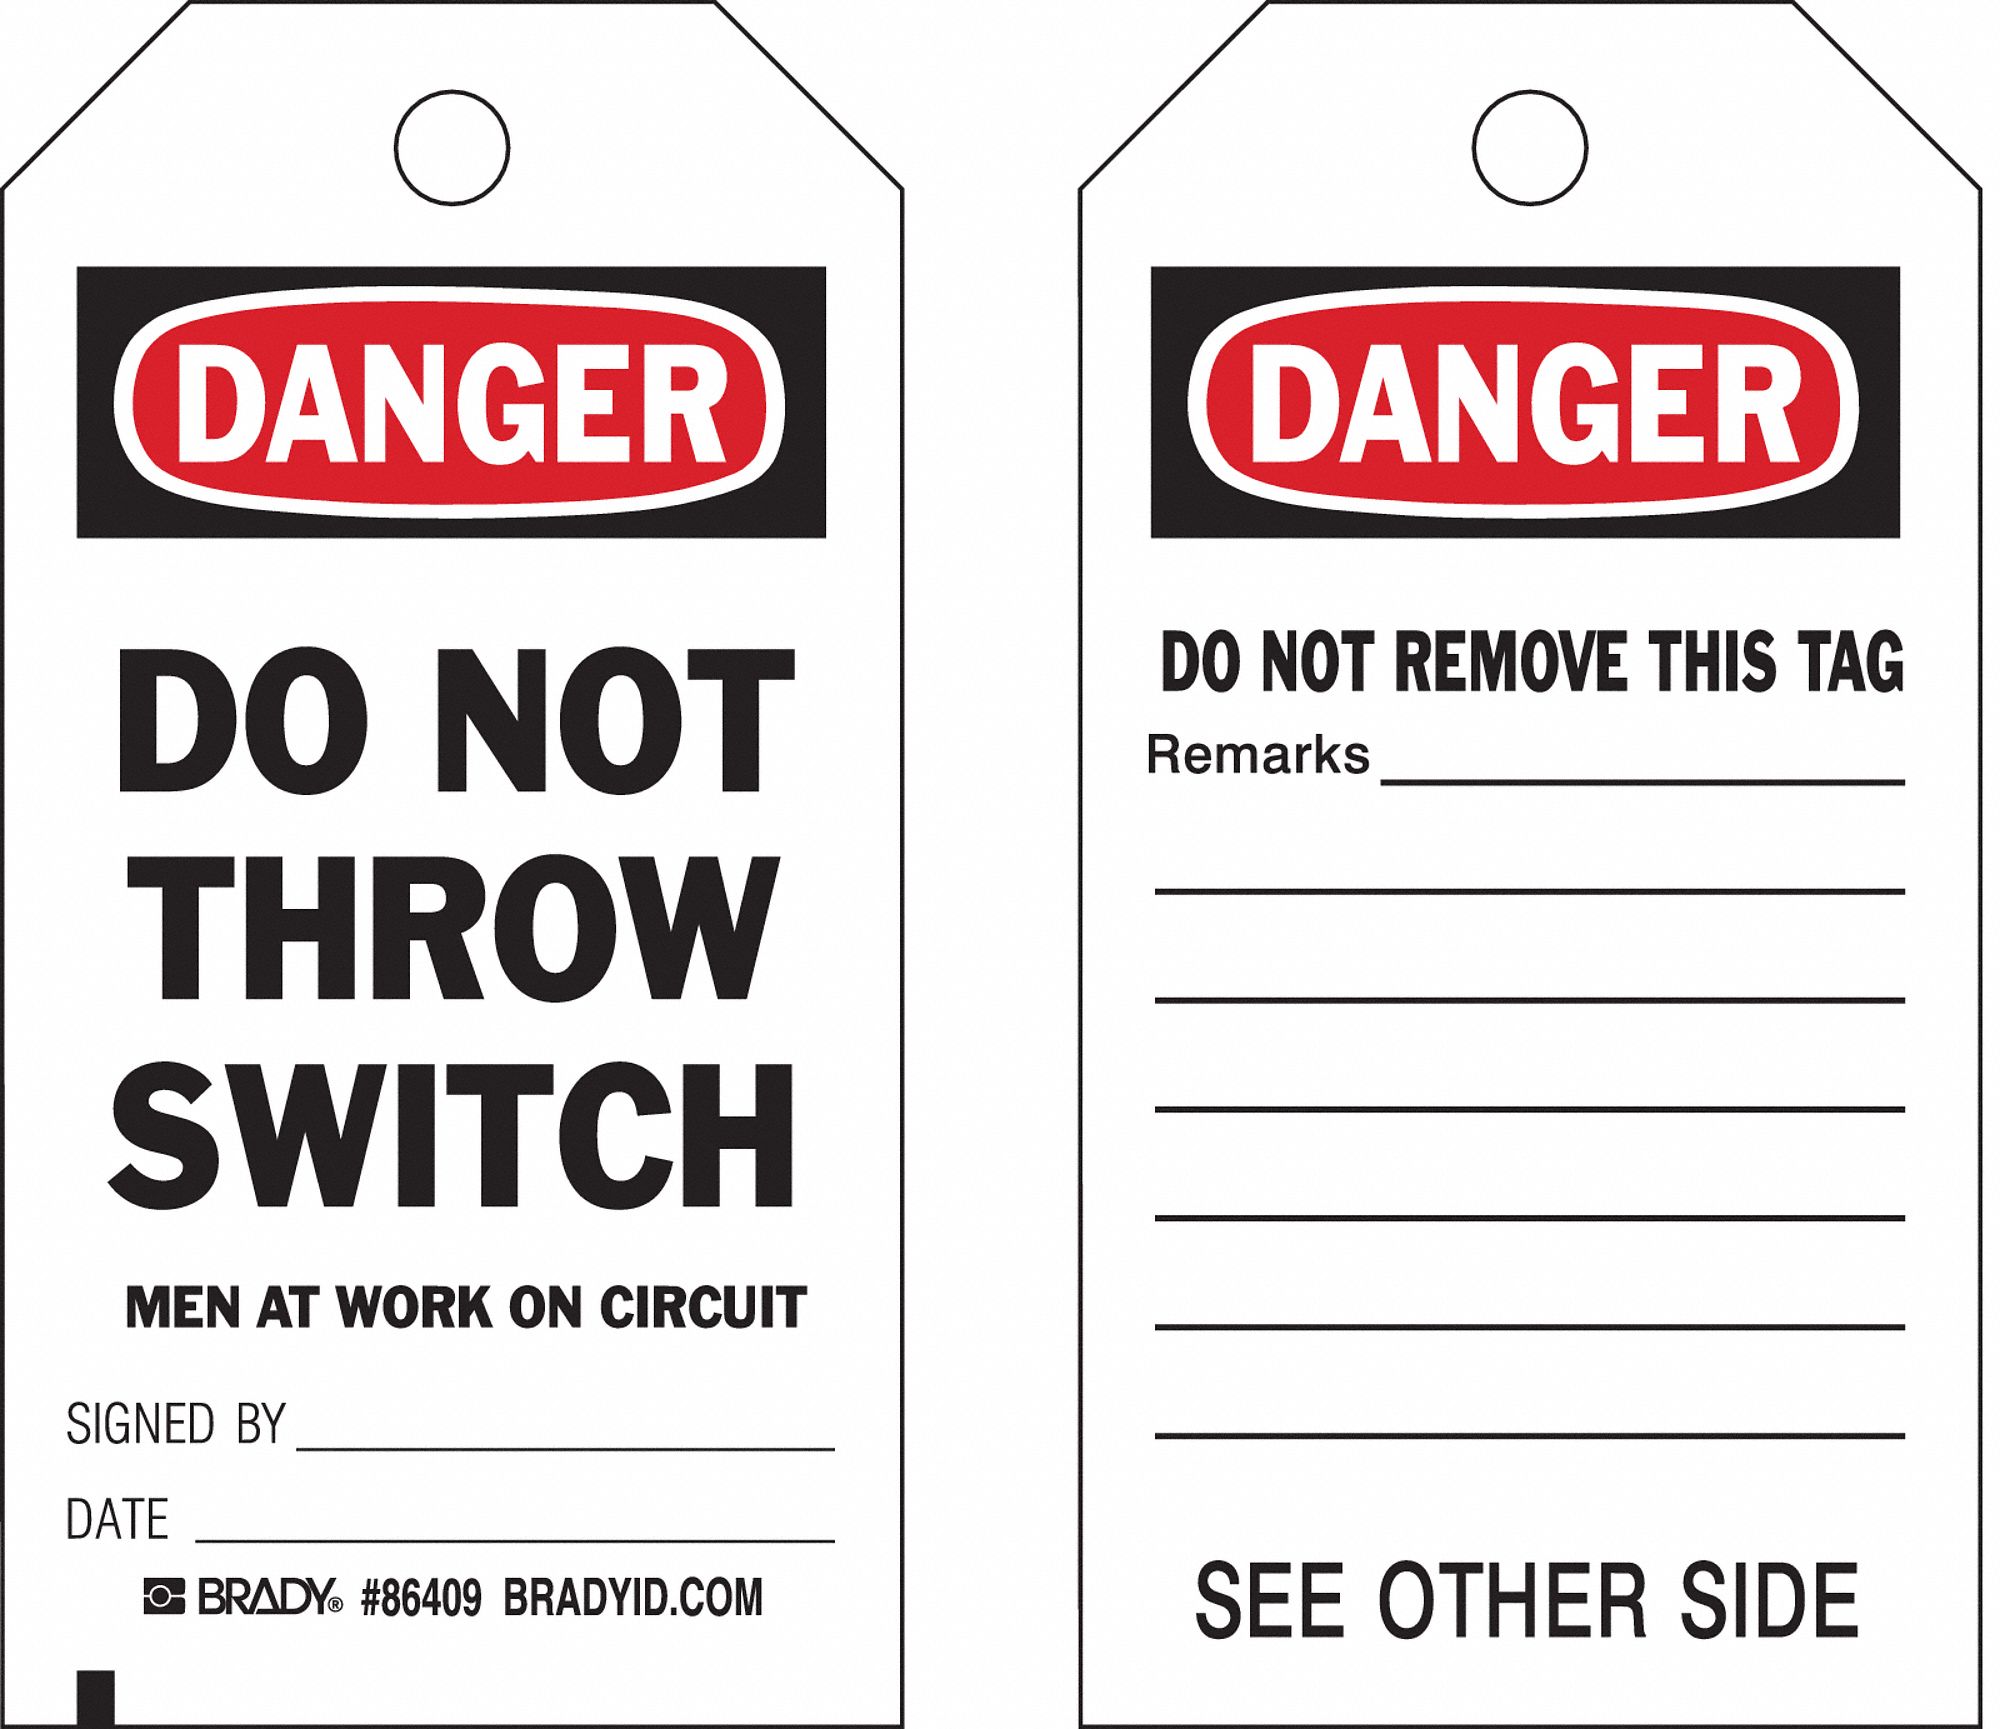 Economy PolyesterDo Not Throw Switch/Men At Work On Circuit, Danger Tag 7